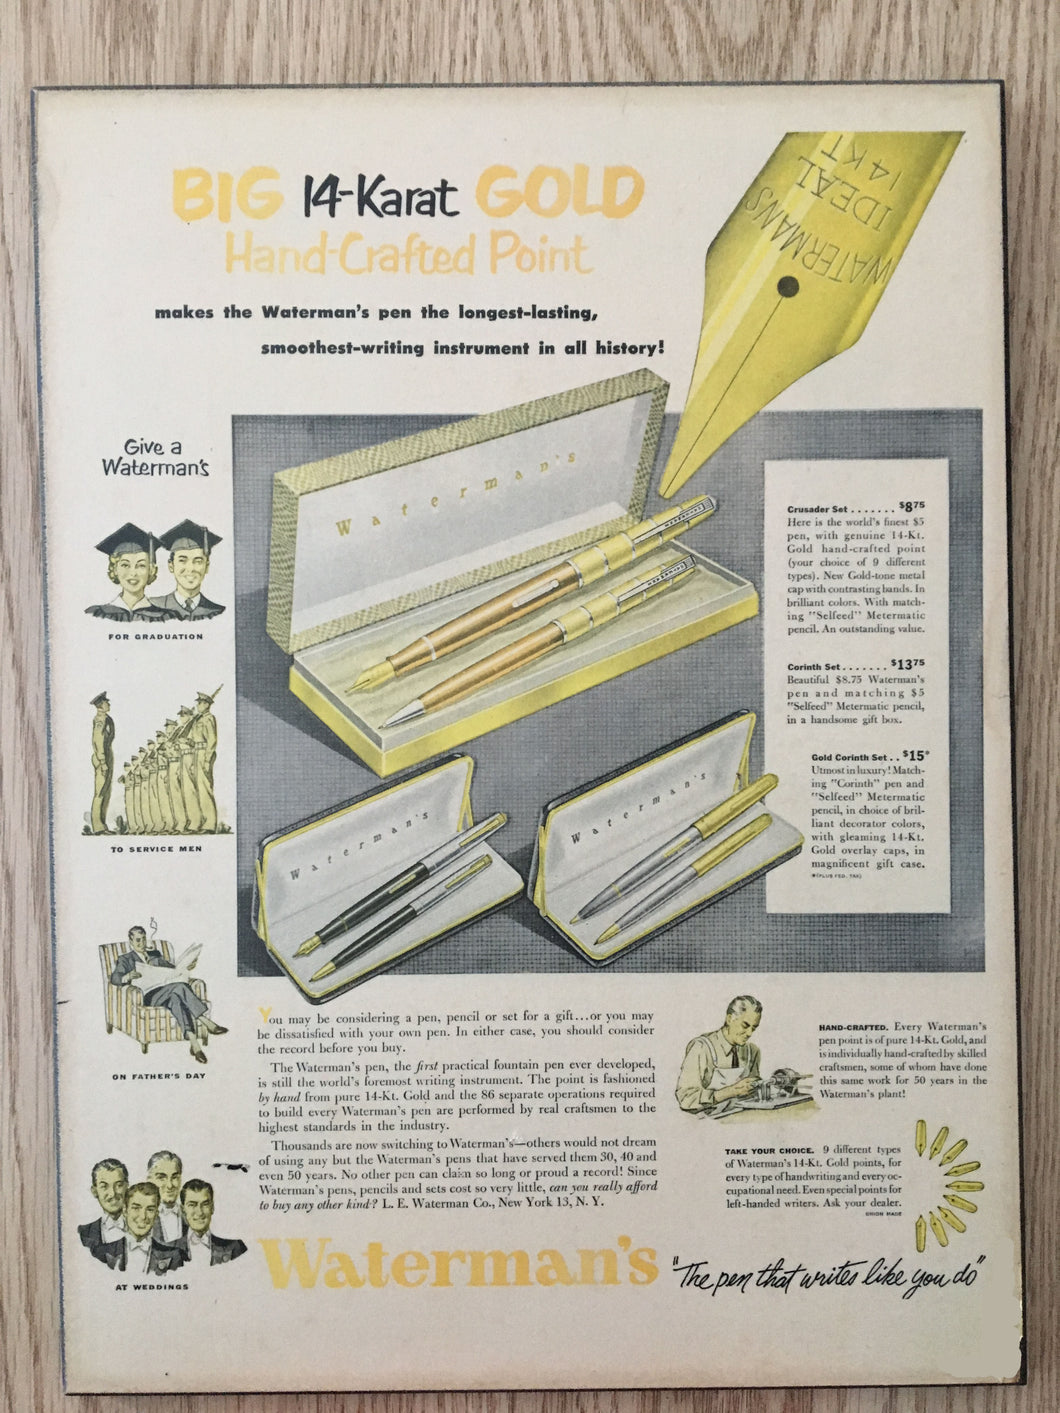 Vintage Ads. Mounted: Big 14-Karat Gold Hand-Crafted Point